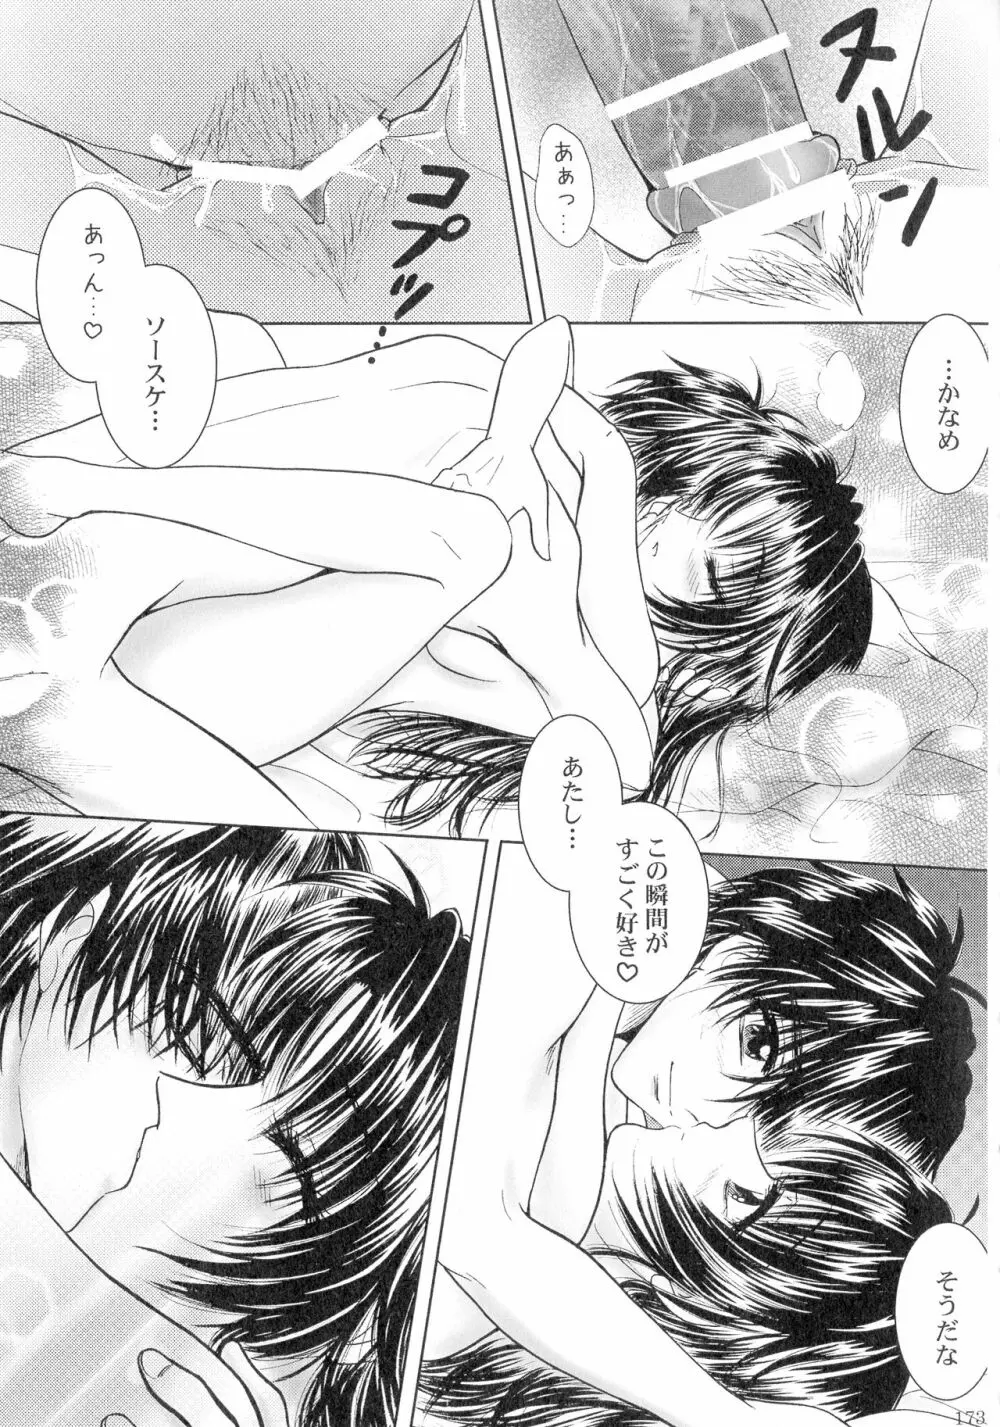 SEXY PANIC 再録集VOL.3 - page172